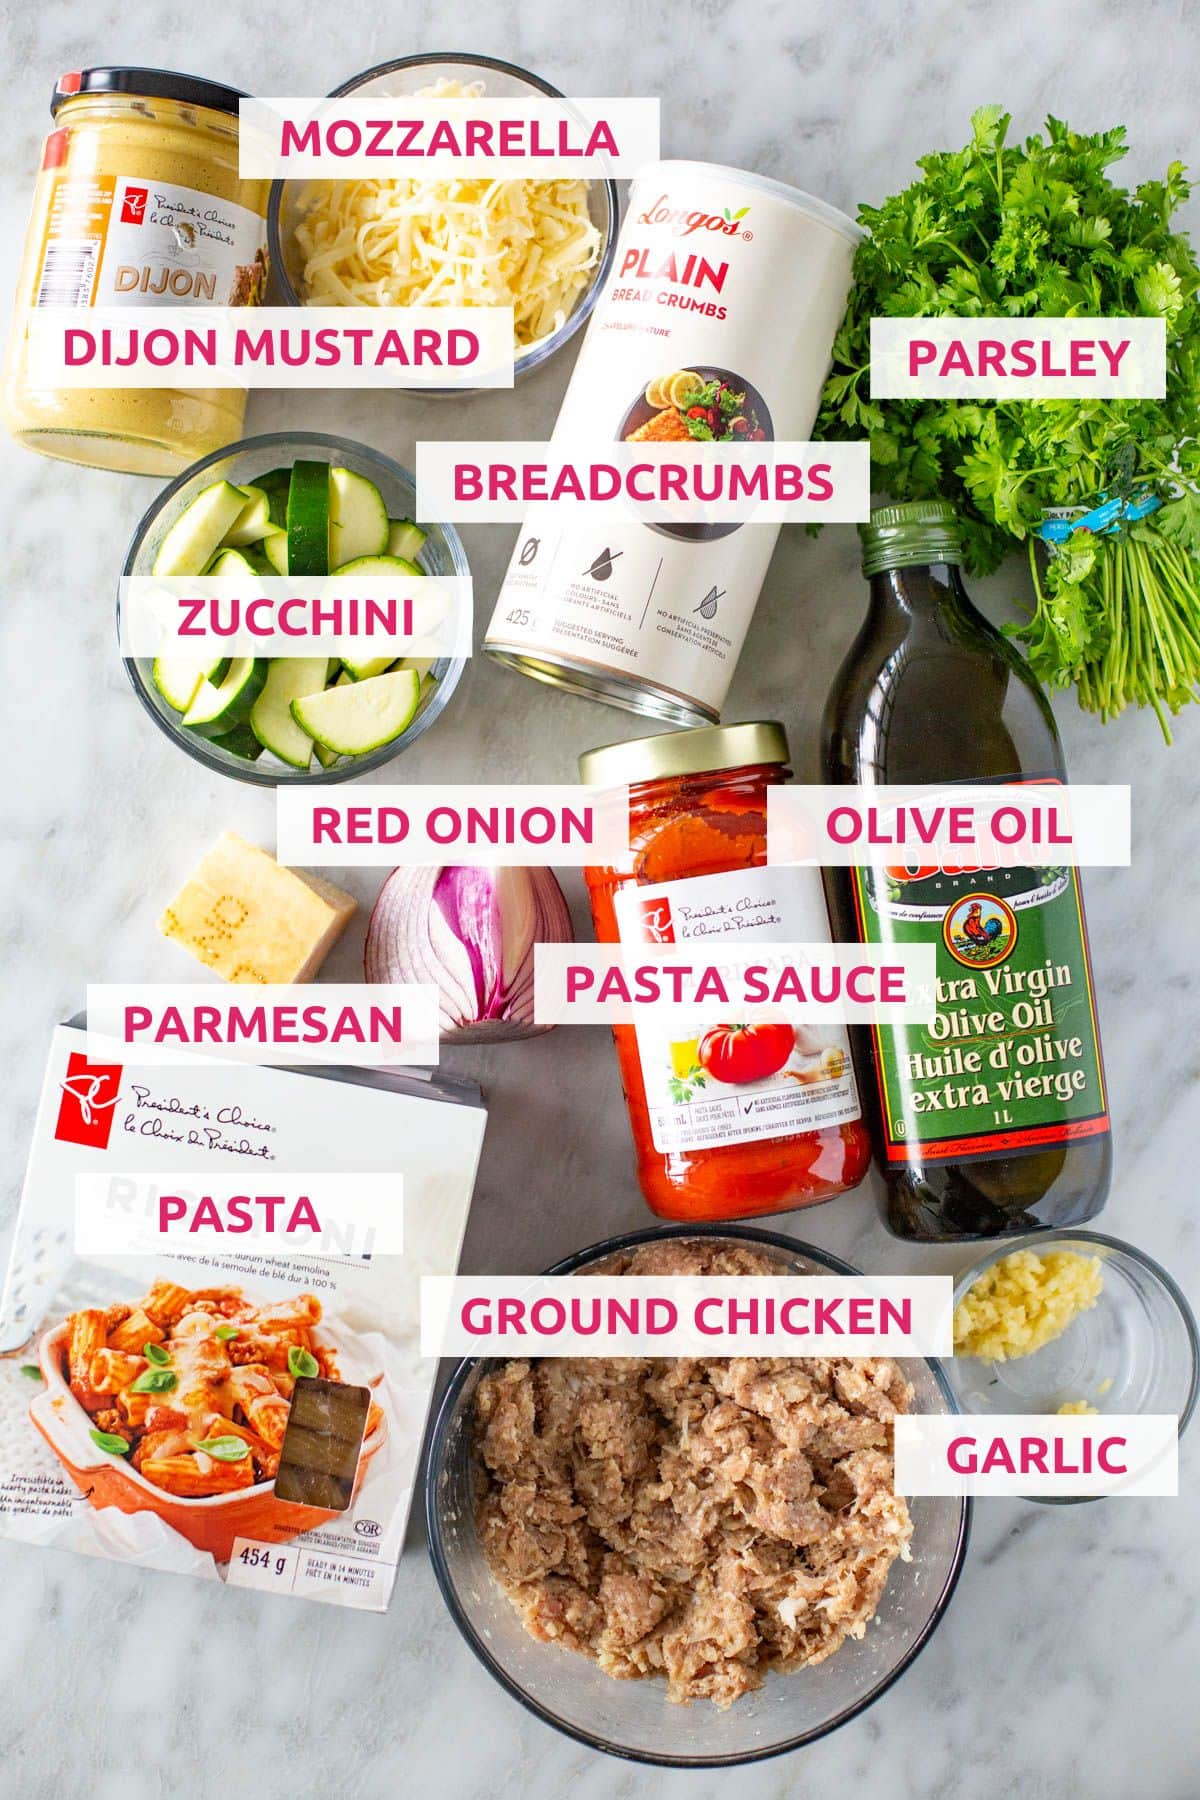 Ingredients for chicken parmesan meatballs: Dijon mustard, mozzarella, breadcrumbs, parsley, zucchini, red onion, pasta sauce, olive oil, parmesan, pasta, ground chicken and garlic